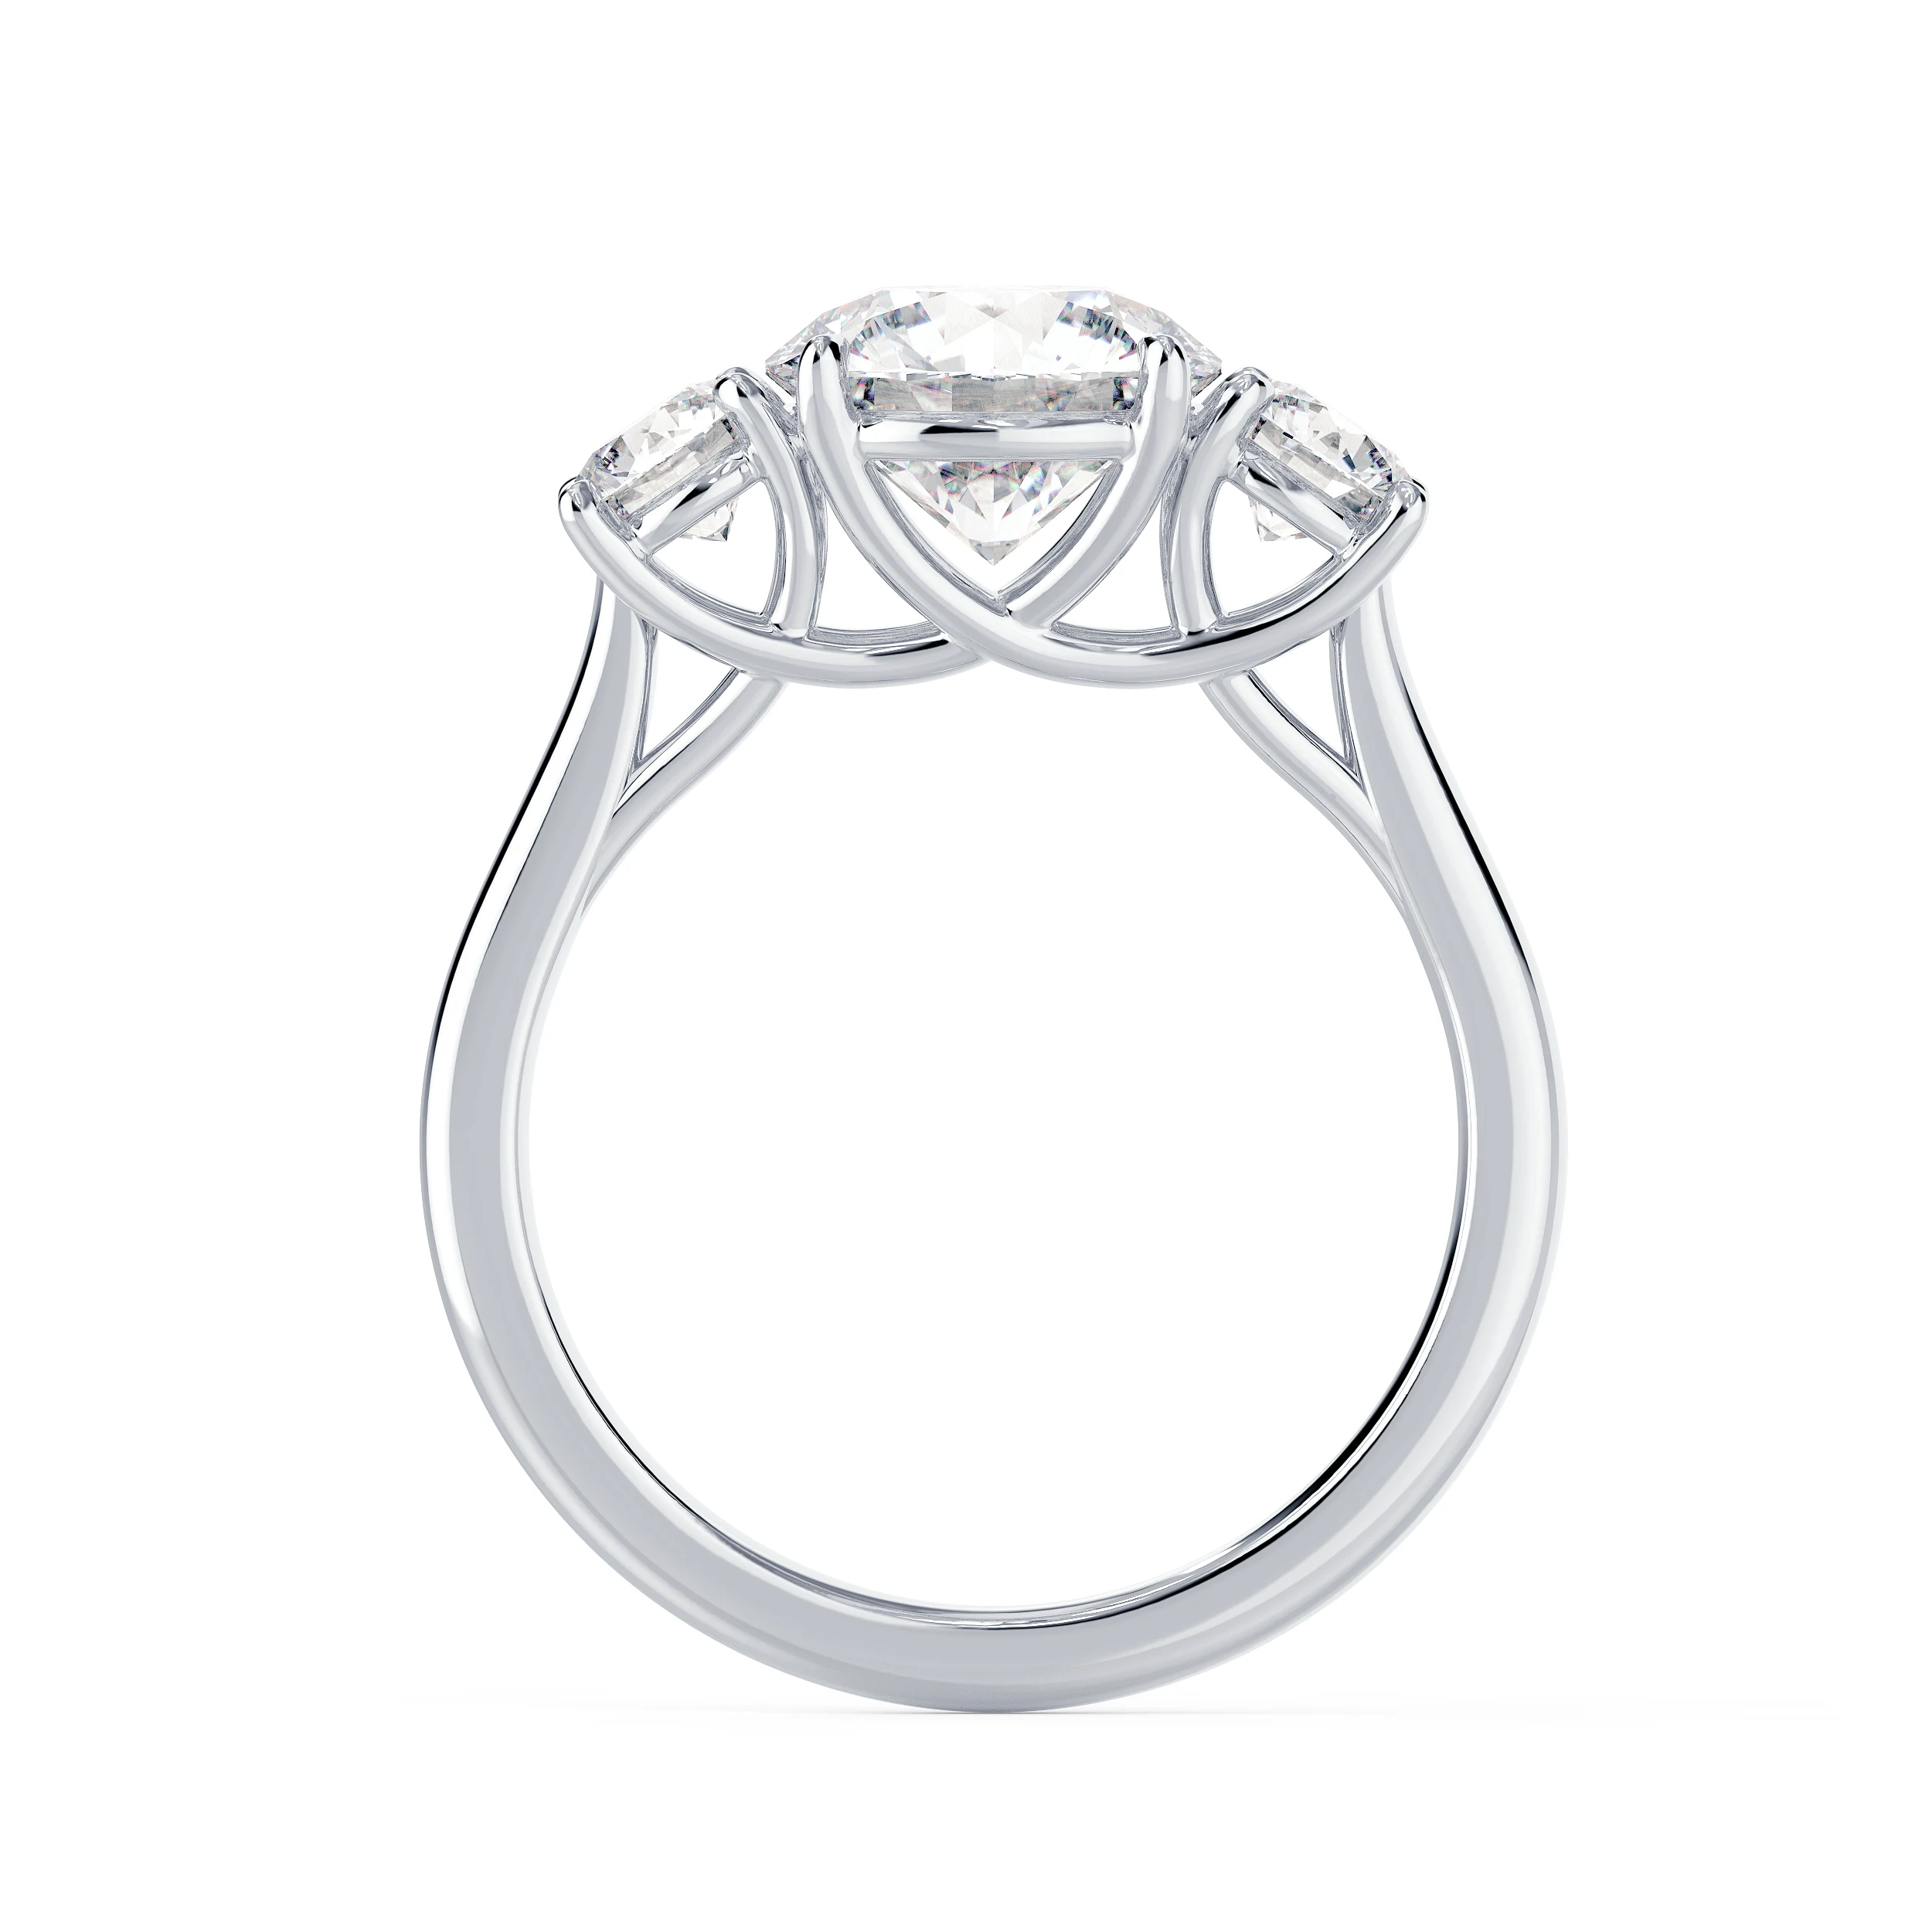 Lab Diamonds Round Three Stone Diamond Engagement Ring in White Gold (Profile View)